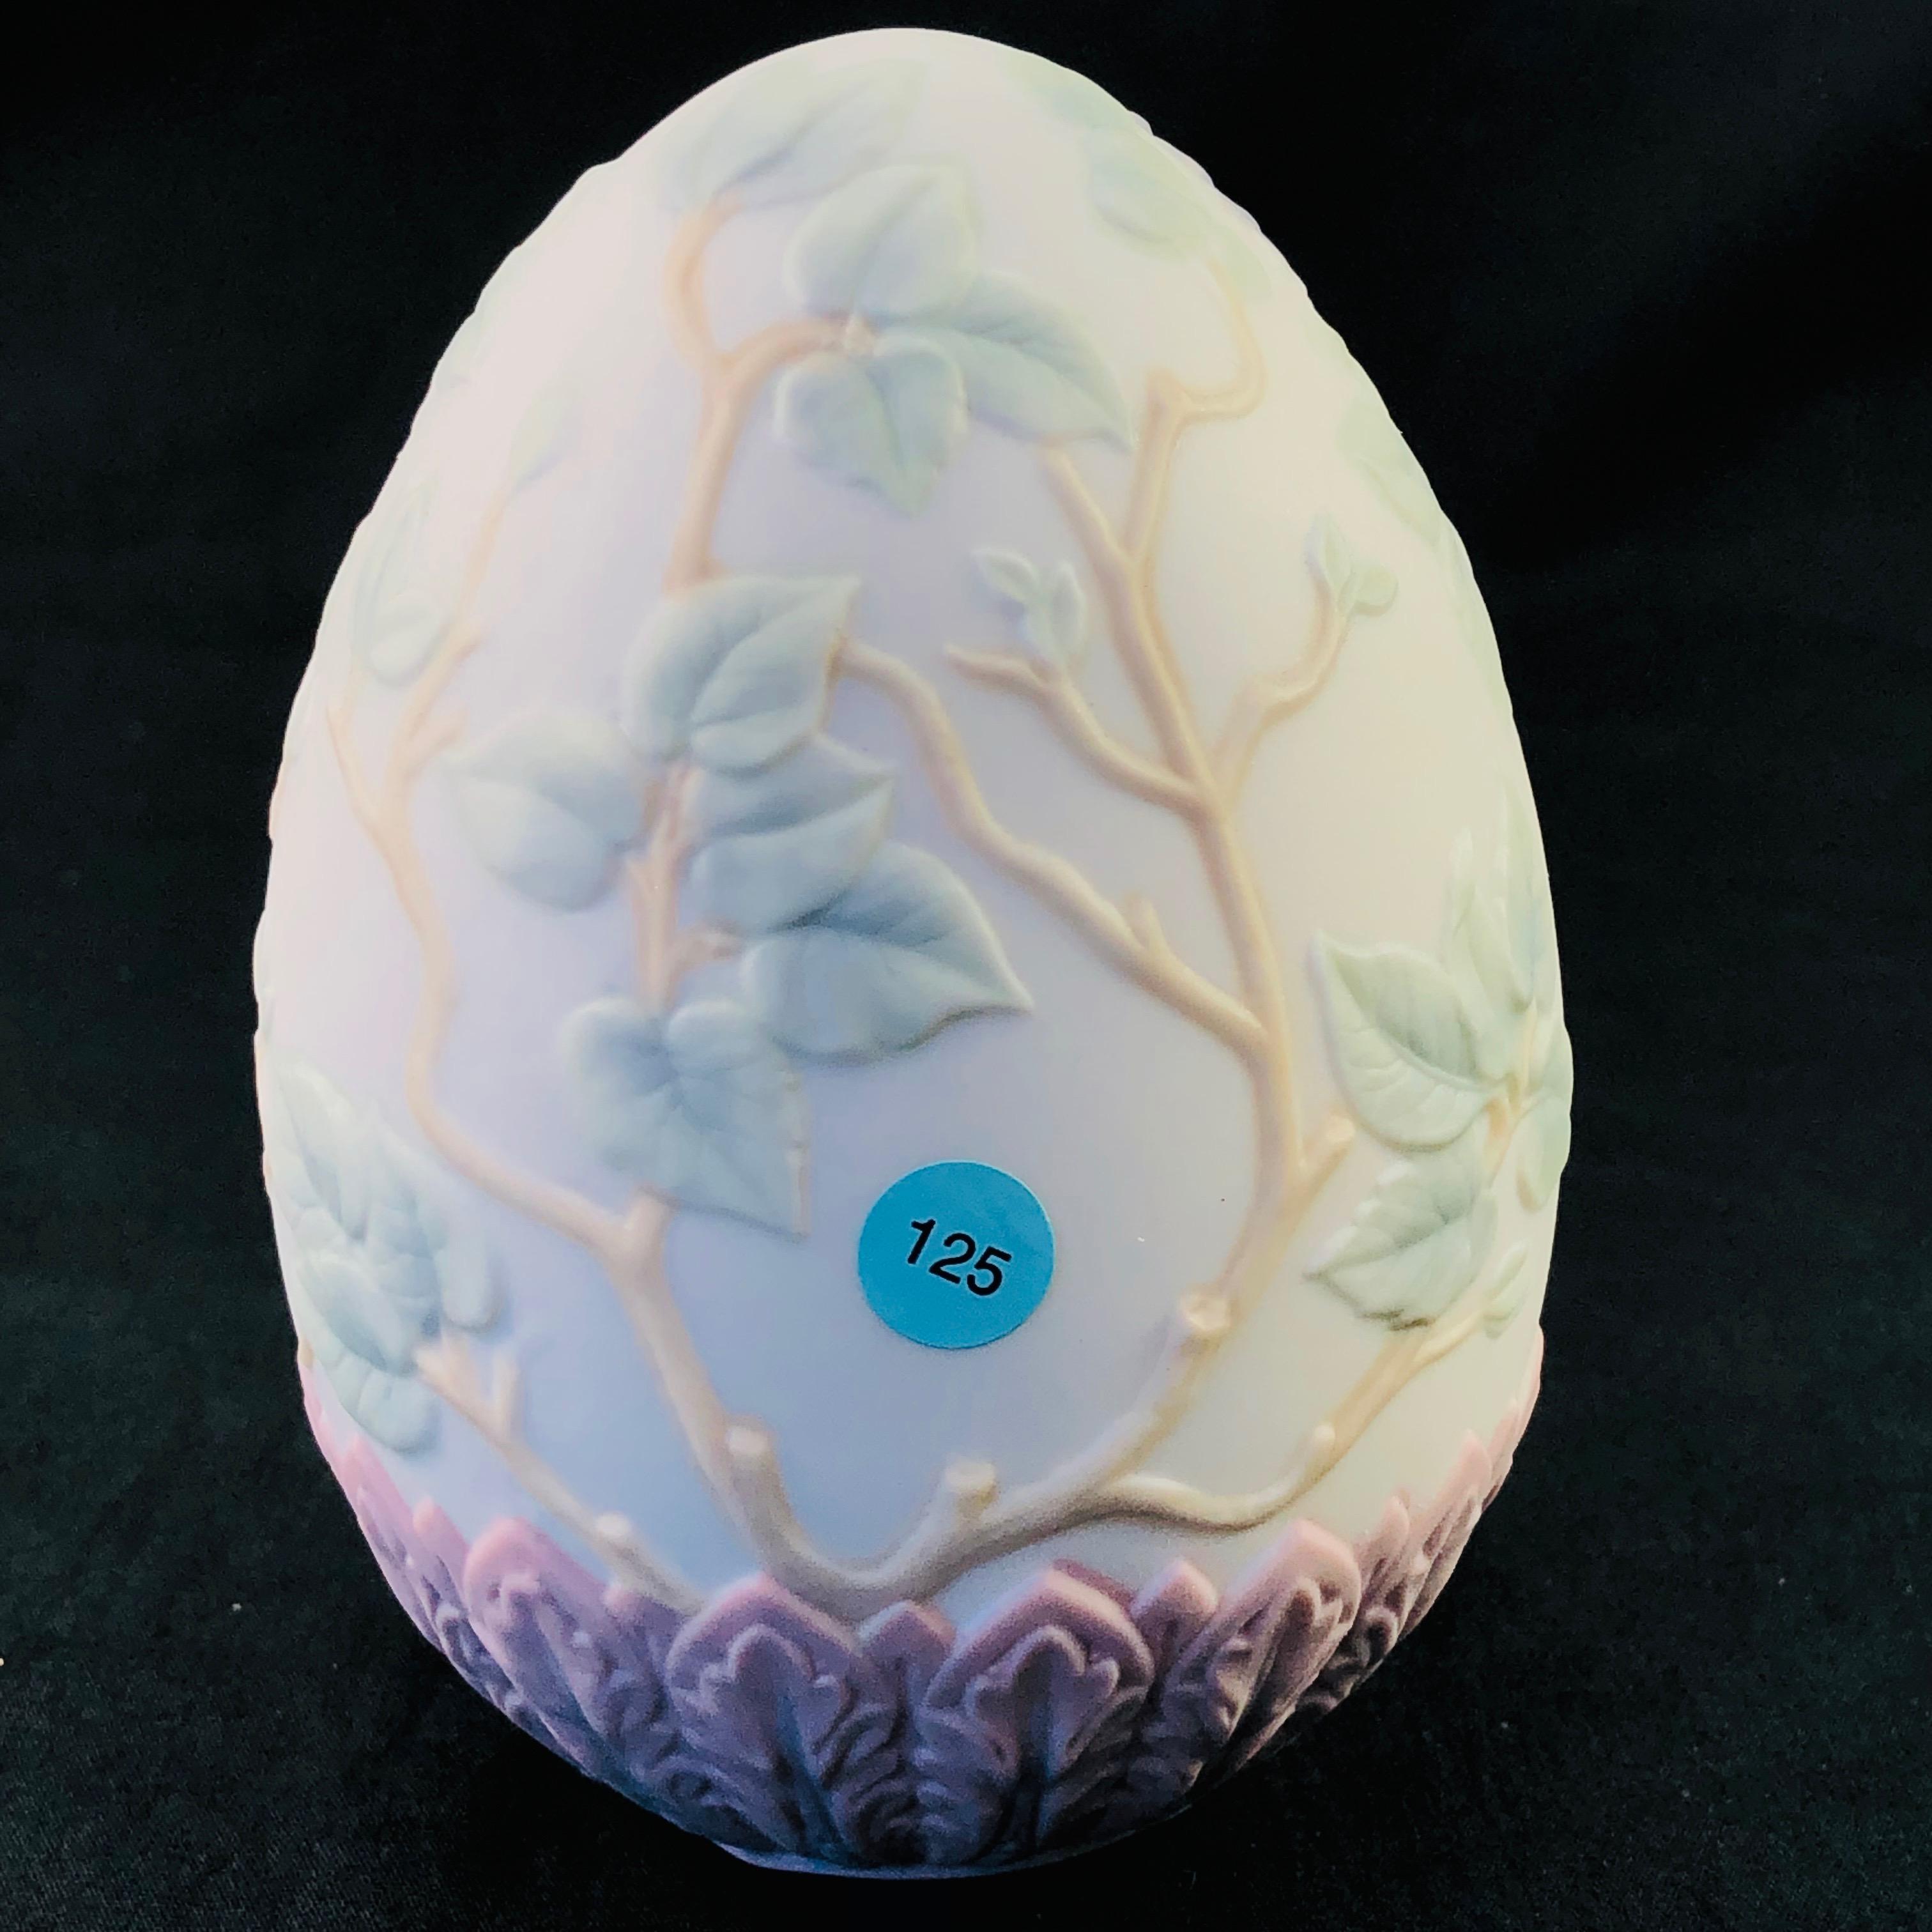 Estate Lladro #16083 1993 limited edition porcelain egg with original box